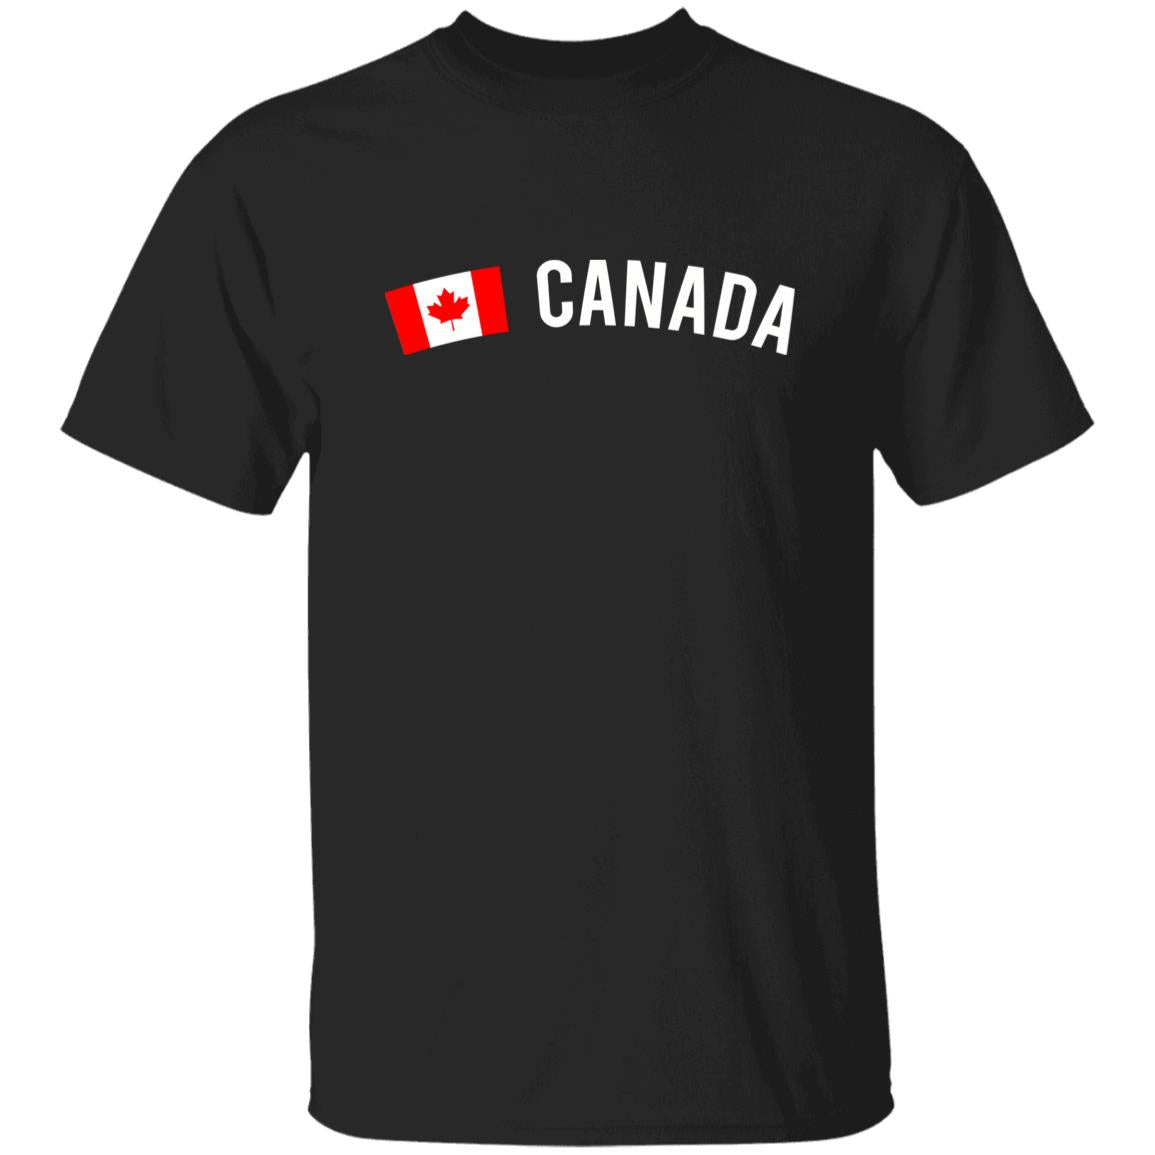 Canada Unisex T-shirt gift Canadian flag tee Toronto White Black Dark Heather-Family-Gift-Planet